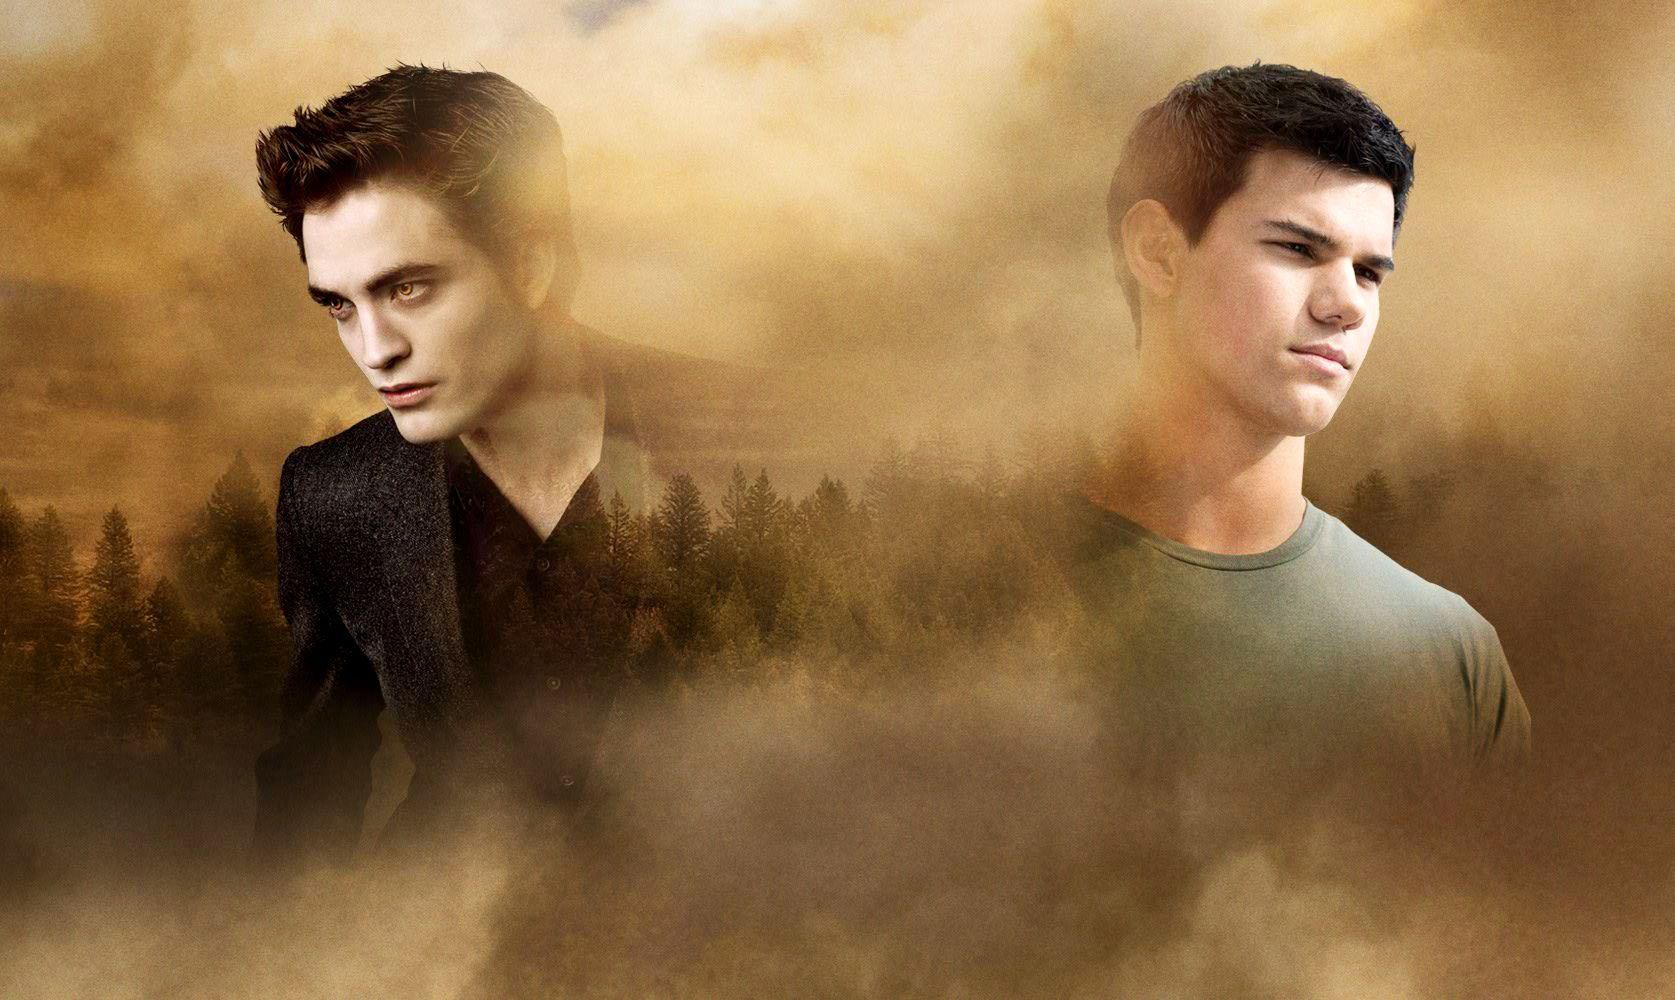 The Twilight Saga's New Moon Picture 41